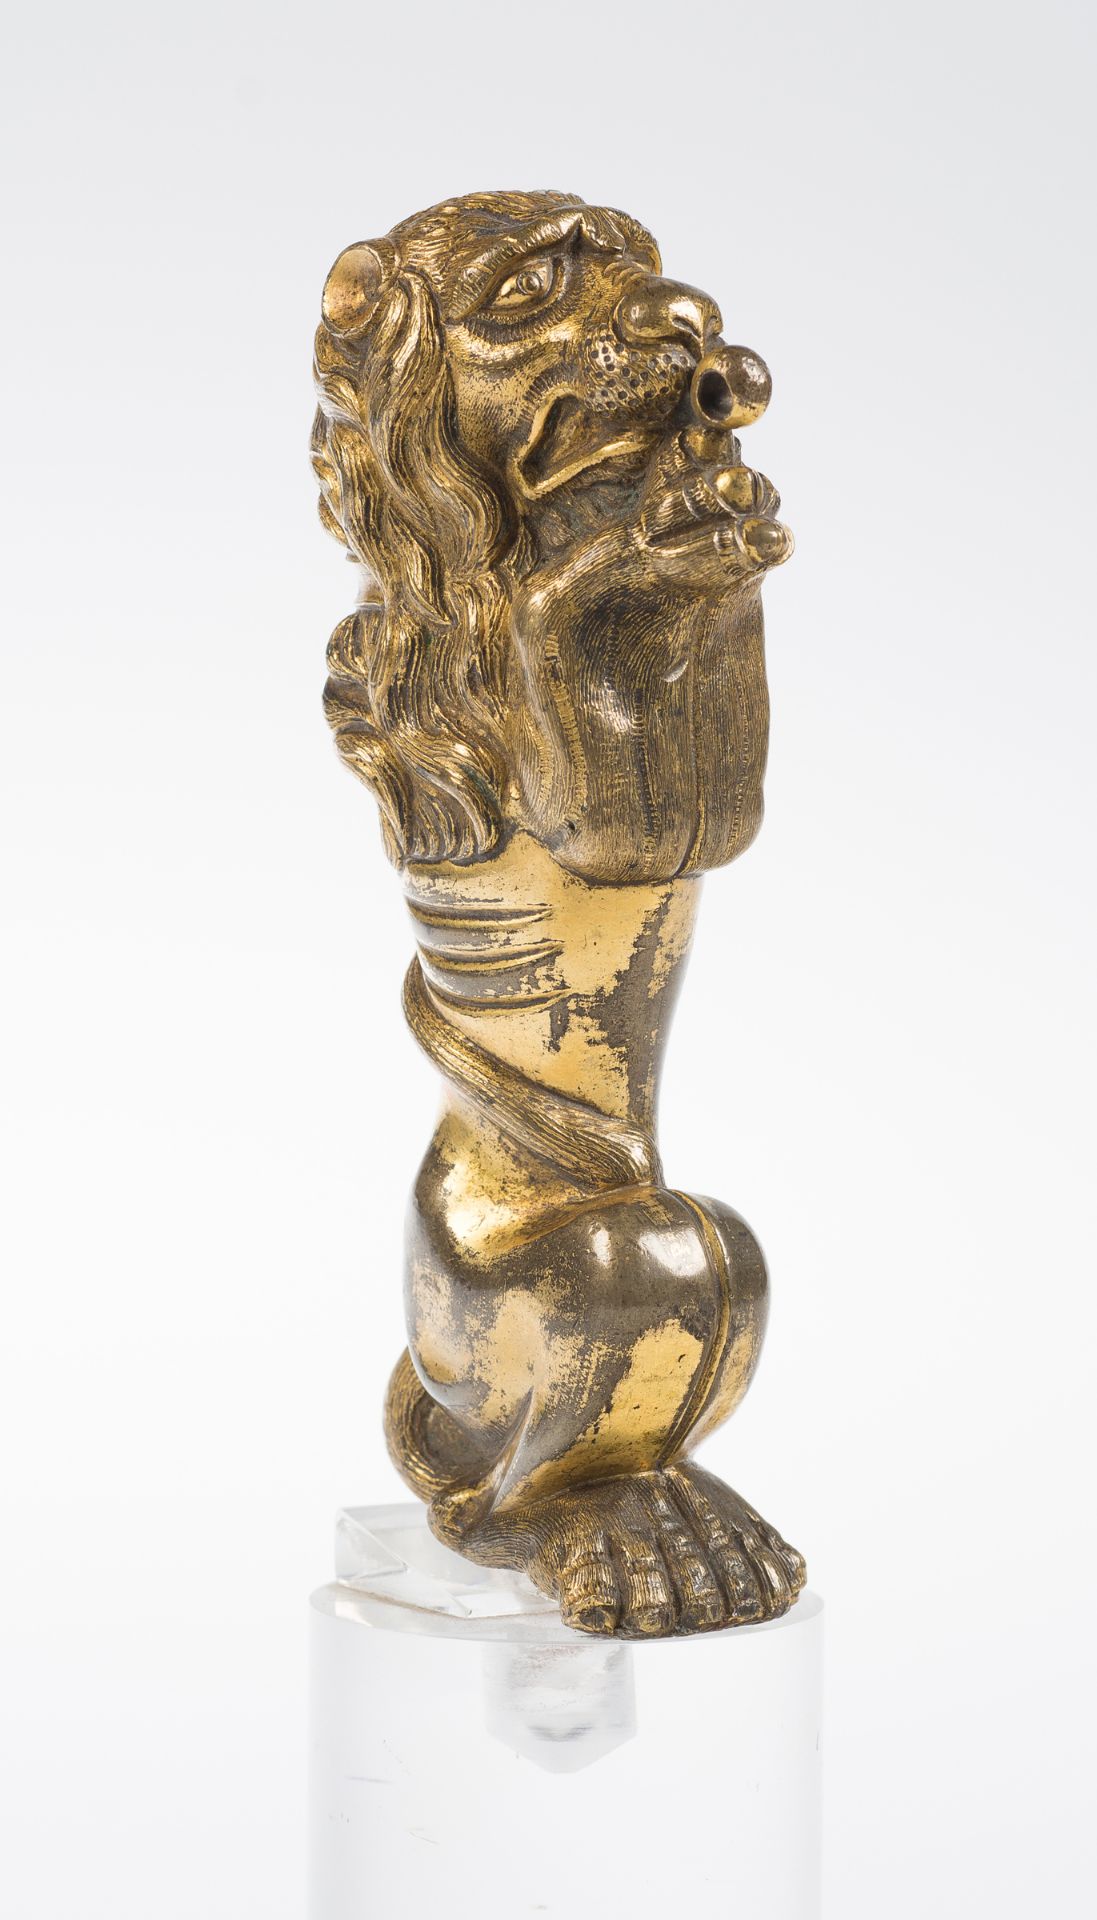 Gilded and chased bronze lion. Italian-Flemish work. Renaissance. Circa 1500. - Image 2 of 7